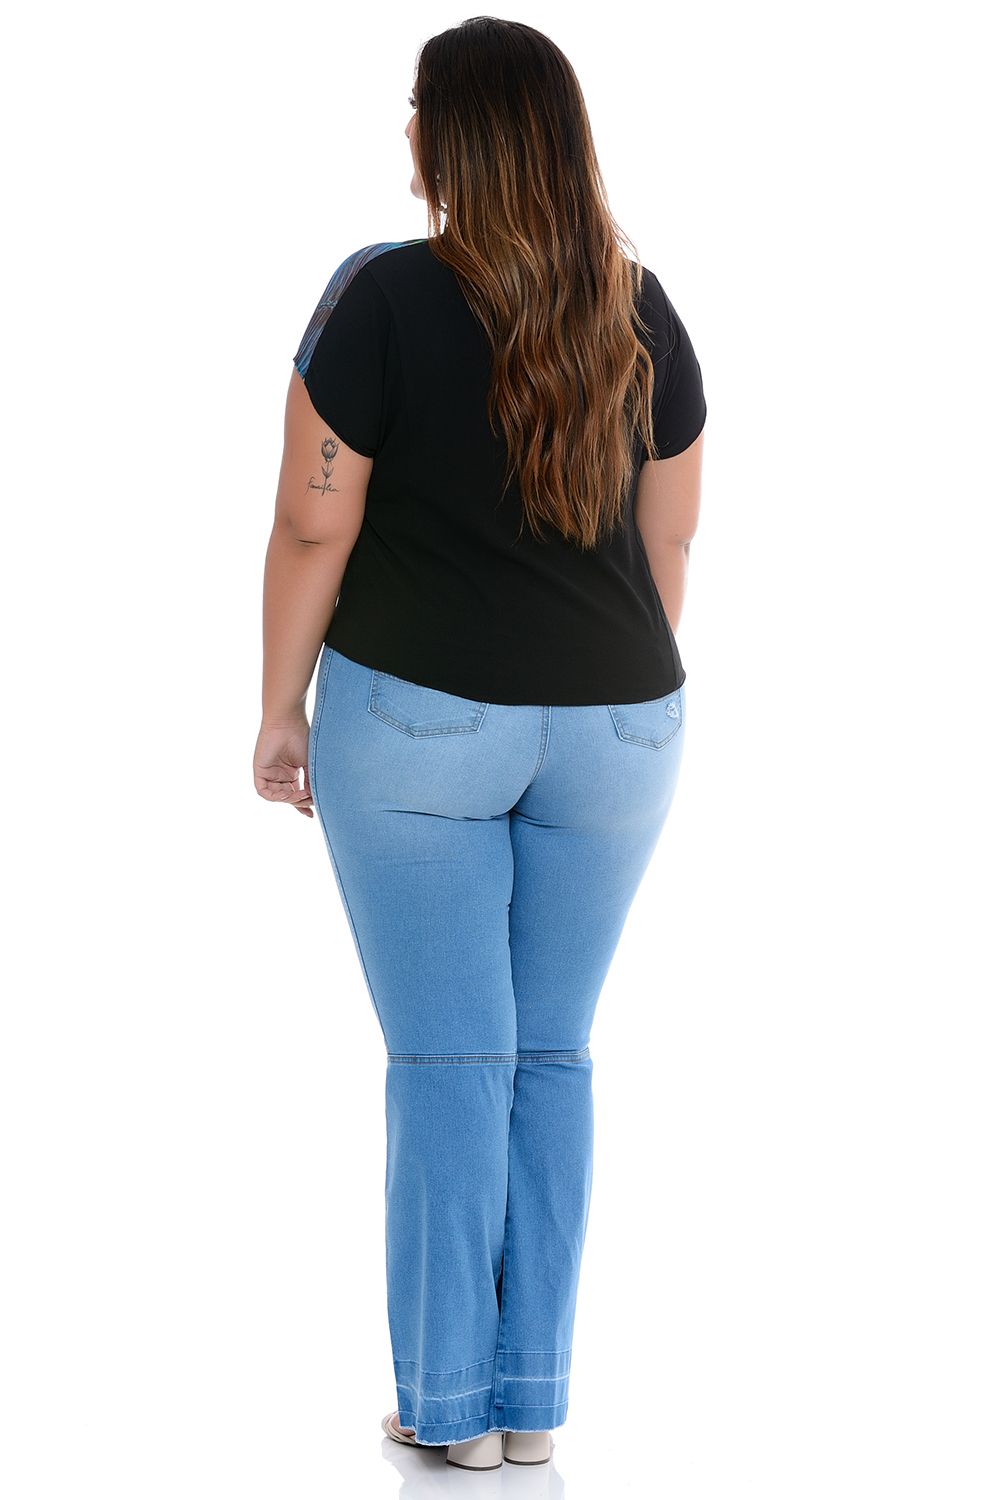 Calça Jeans Plus Size Flare com Fenda  Meena Moda Plus Size - Roupas Plus  Size de Qualidade